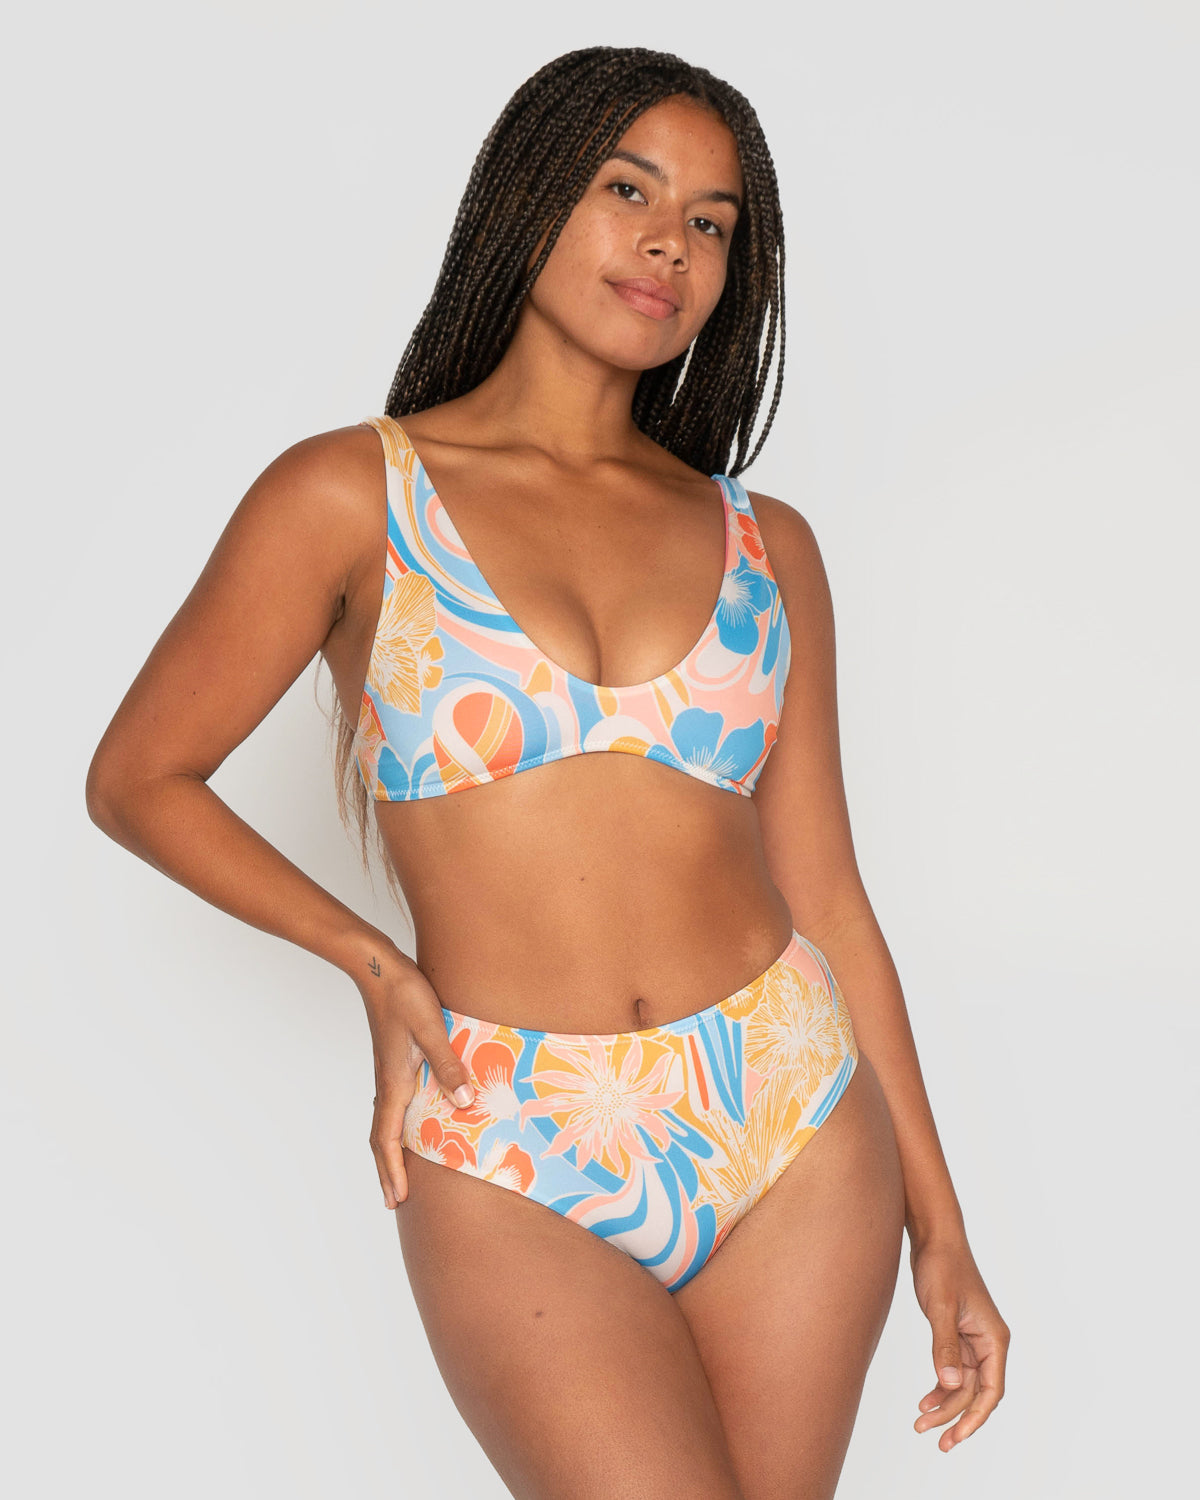 Brasilia Ella Multicolor Floral Pattern Reversible Bikini Swim Suit Sun Protection